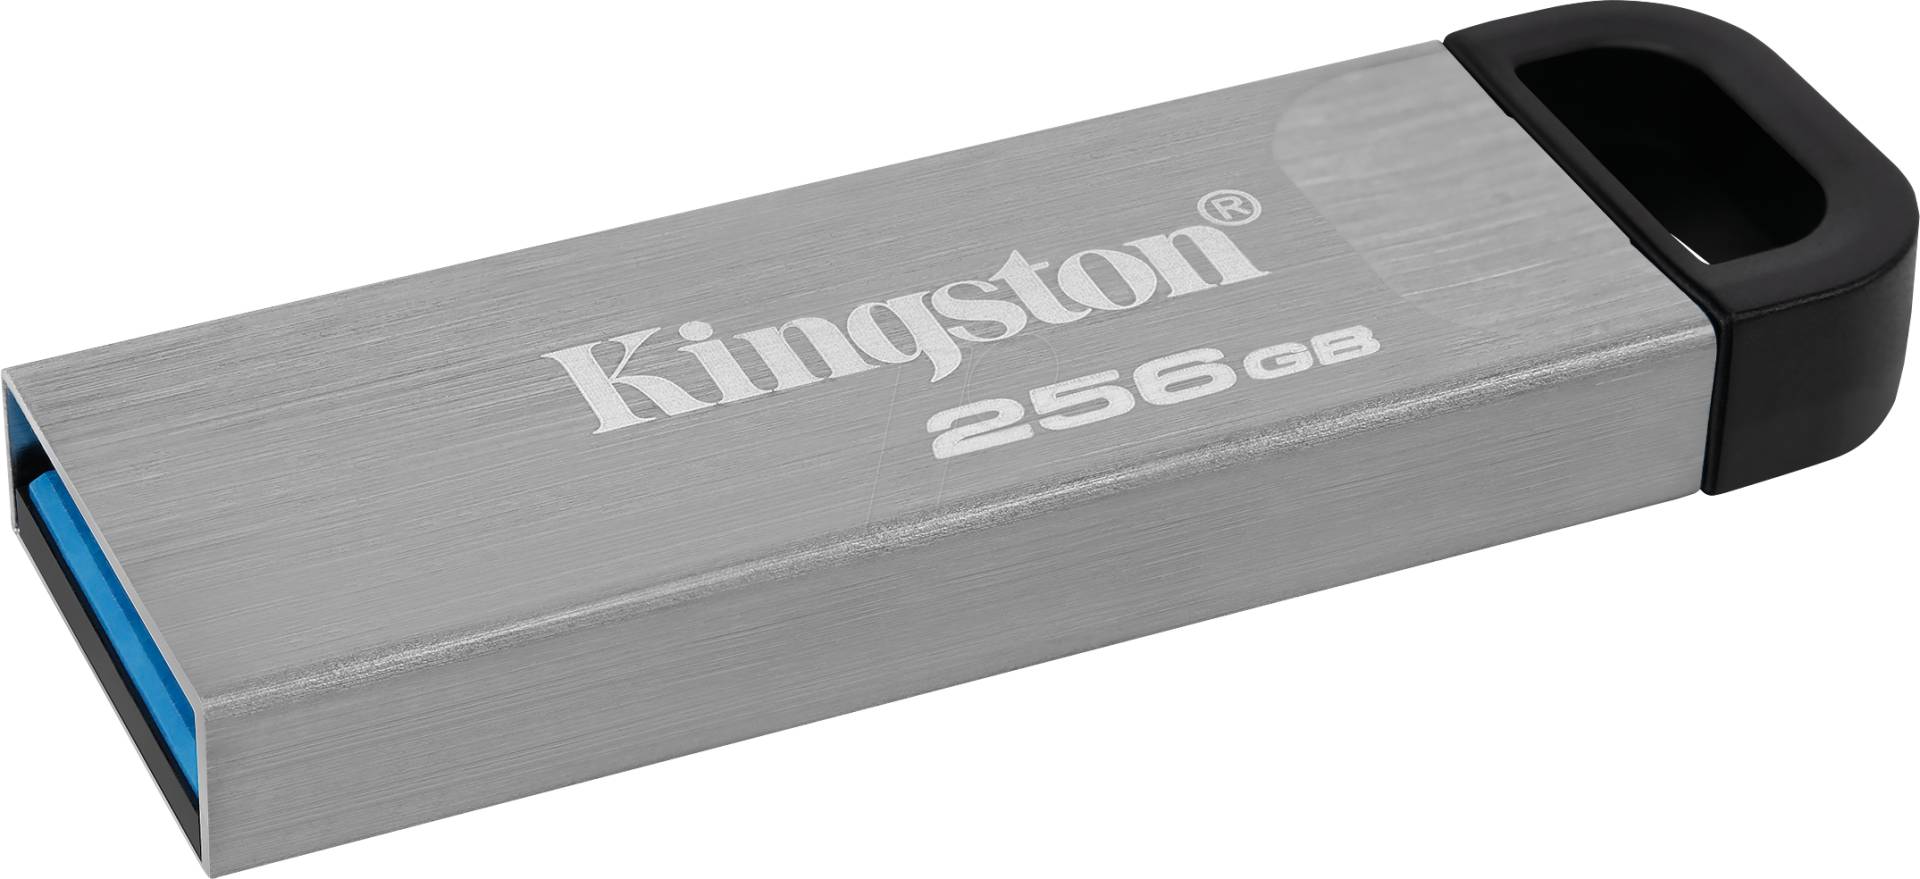 DTKN/256GB - USB-Stick, 256 GB USB3.2 Gen 1 DataTraveler Kyson von Kingston